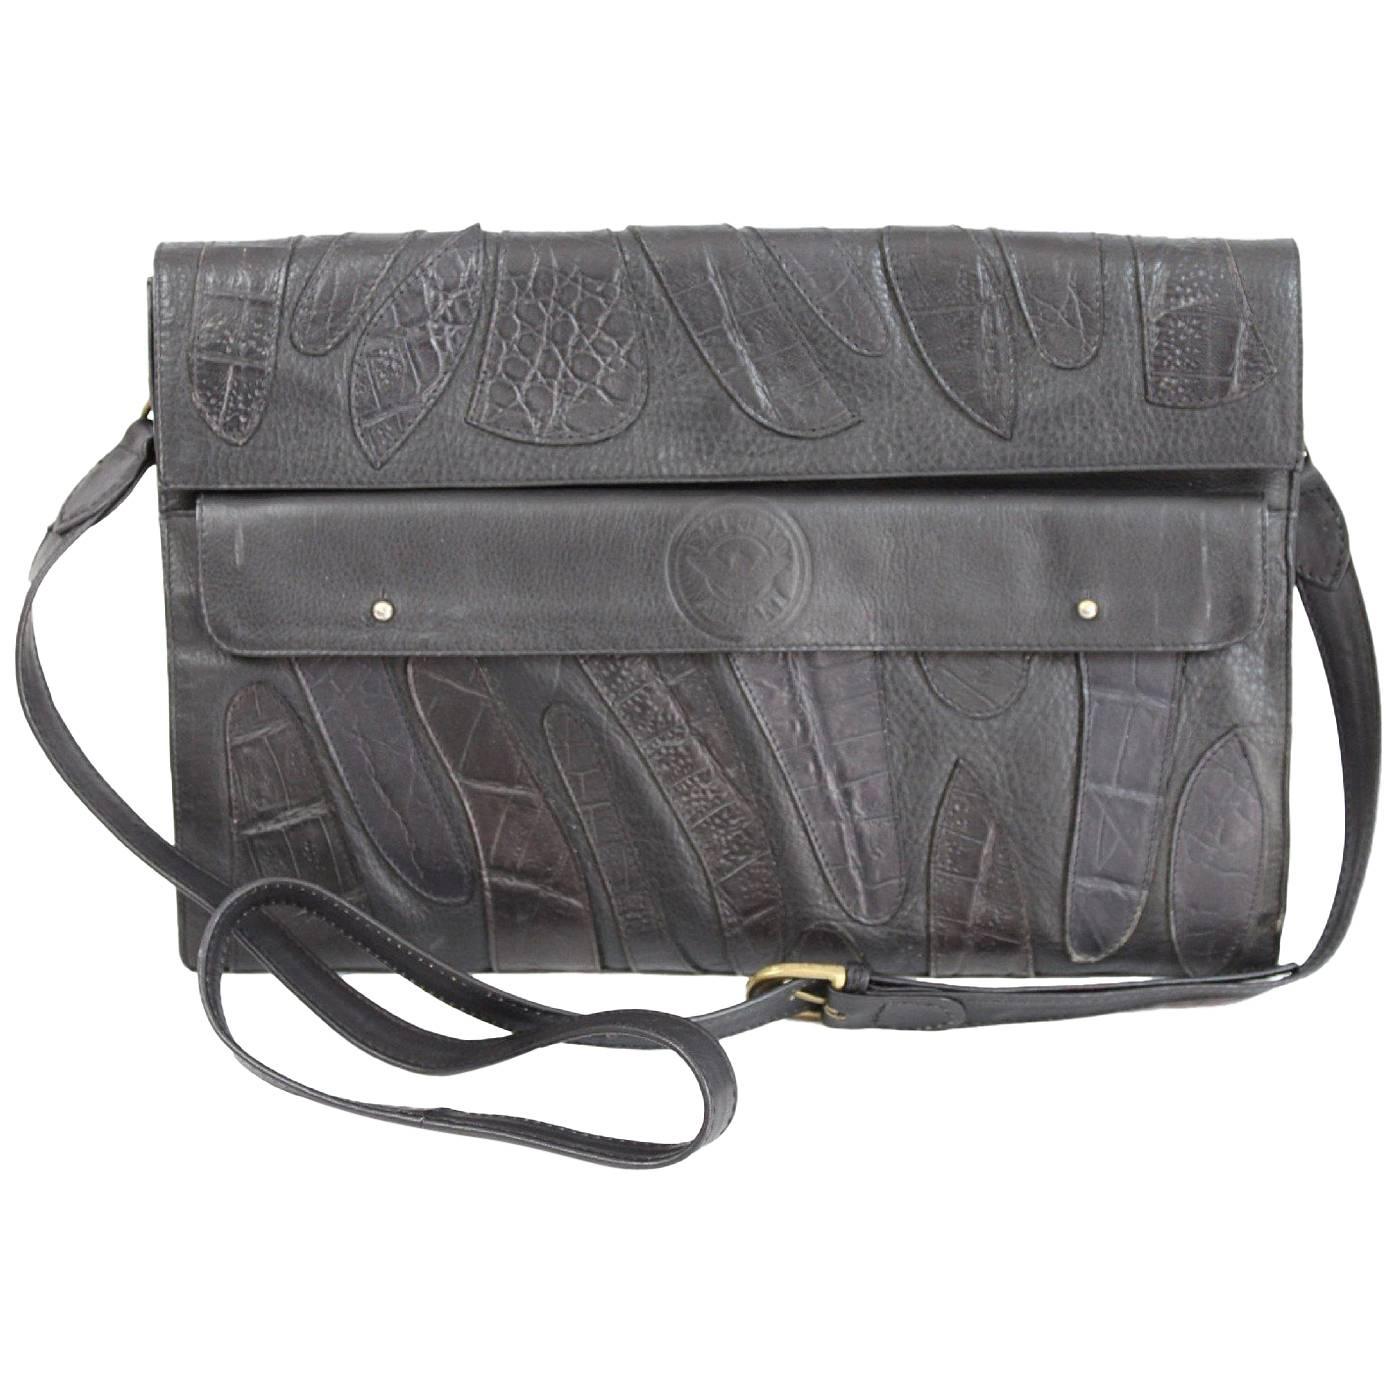 Giorgio Armani leather black shoulder bag excellent condition 1990s women’s For Sale